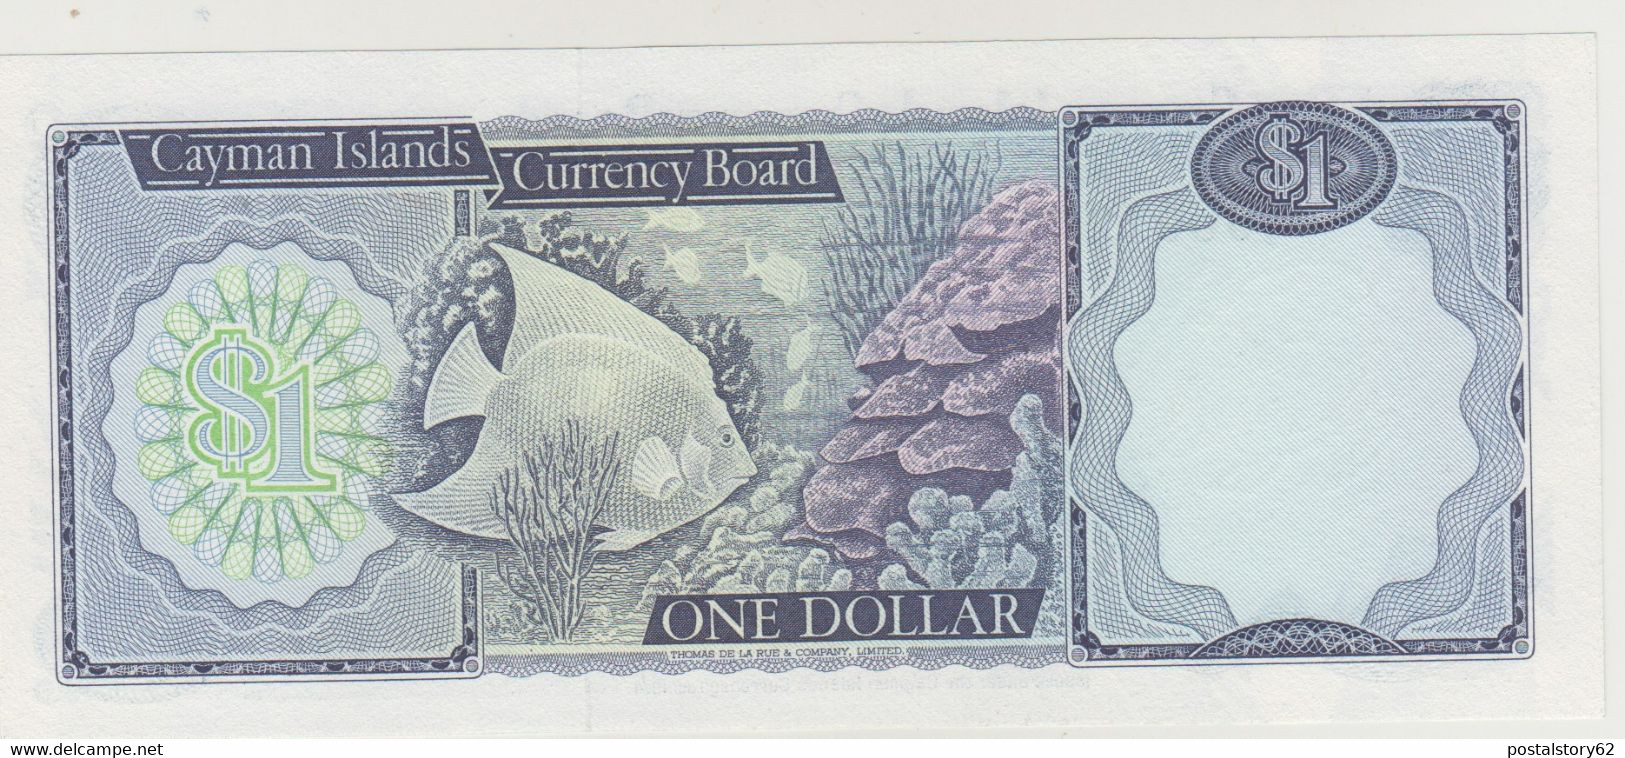 Cayman Islands Banconota Da 1 Dollar L.1974 ( 1985 ) Pick 5 D Unc./fds - Iles Cayman